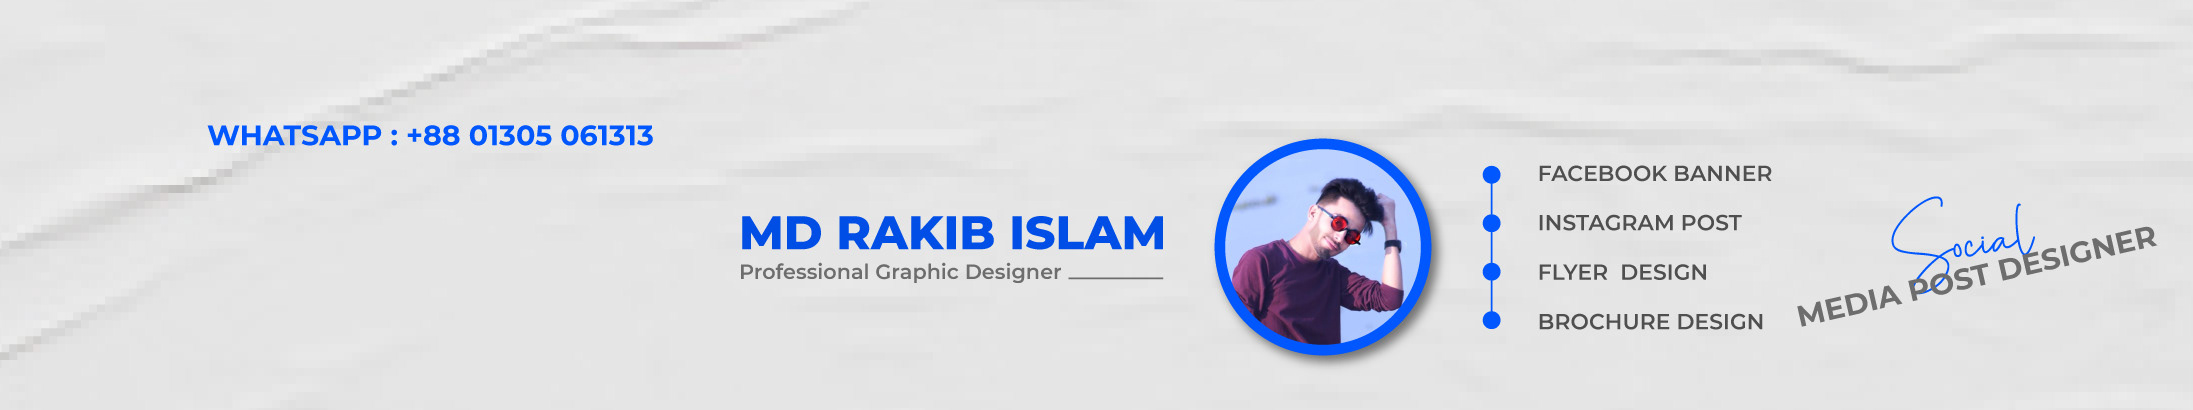 Profielbanner van Md Rakib Islam